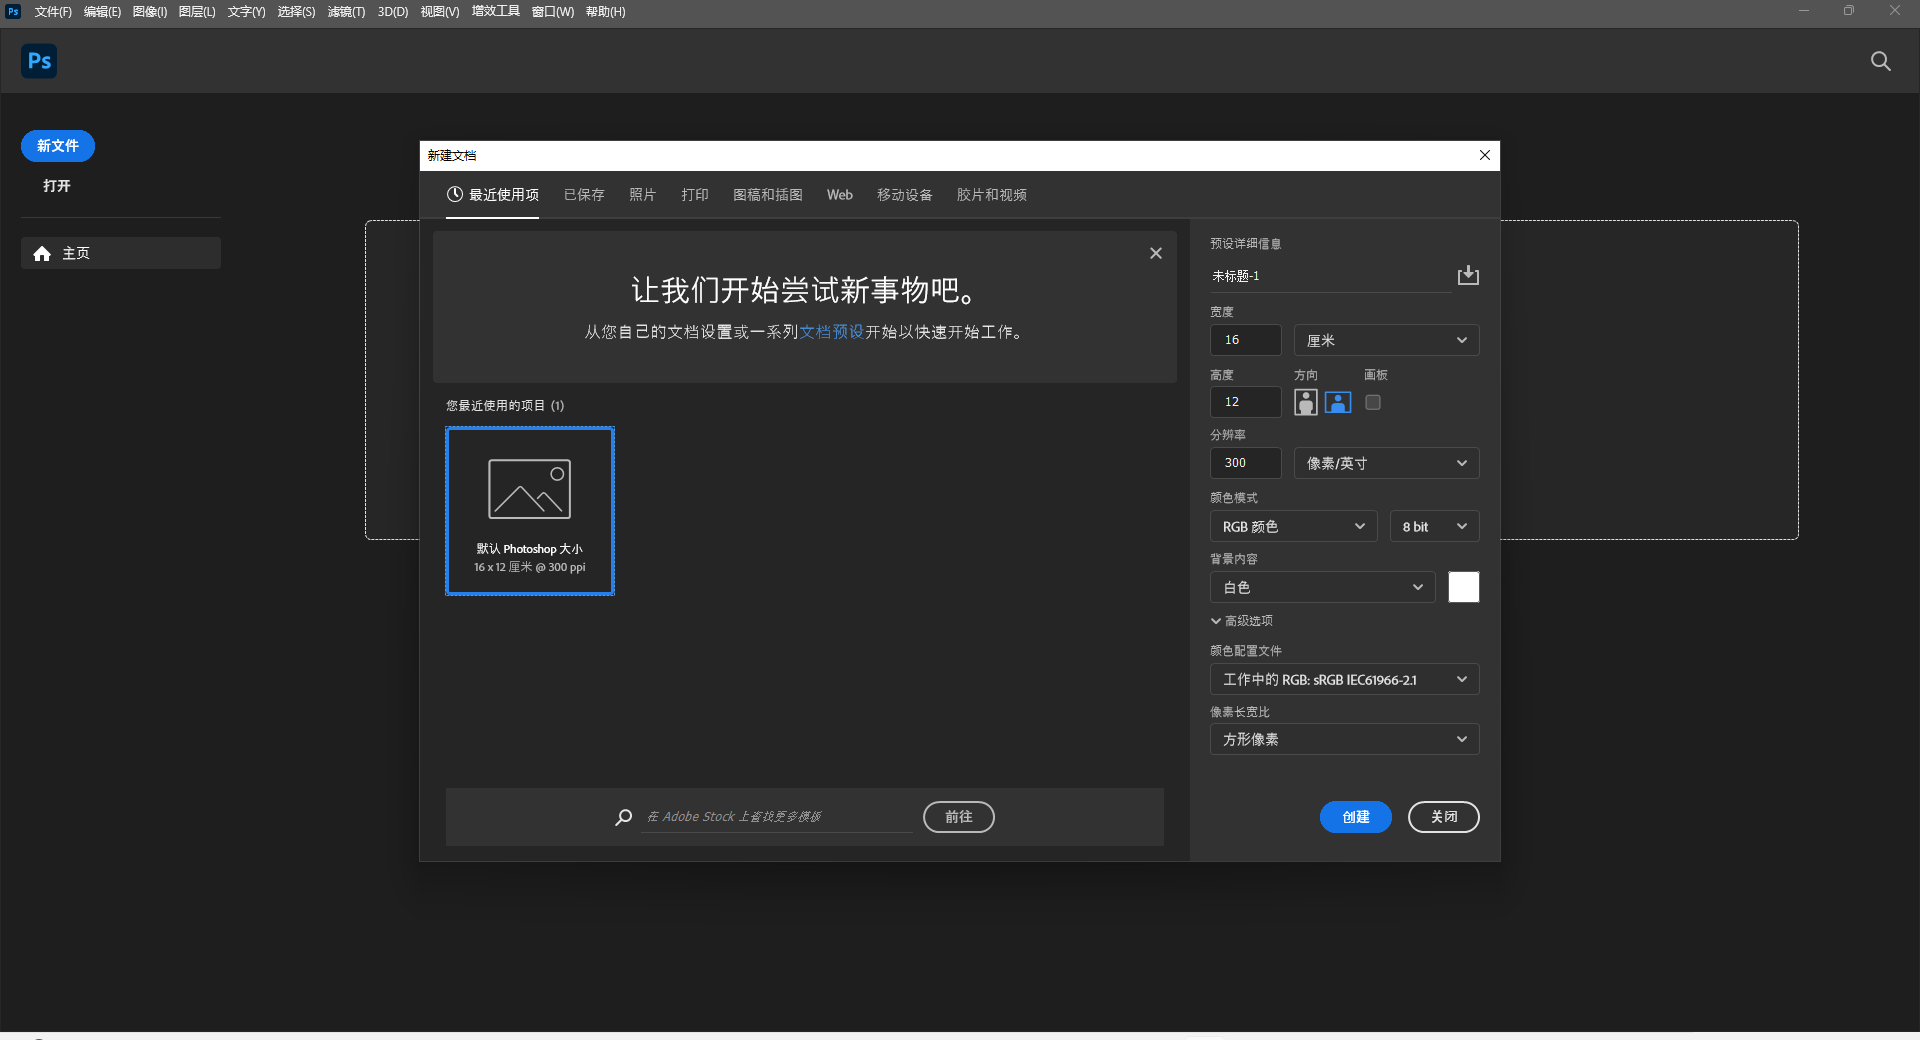 Adobe Photoshop 2024 v25.1最新版【ps2024】免费破解版下载安装教程